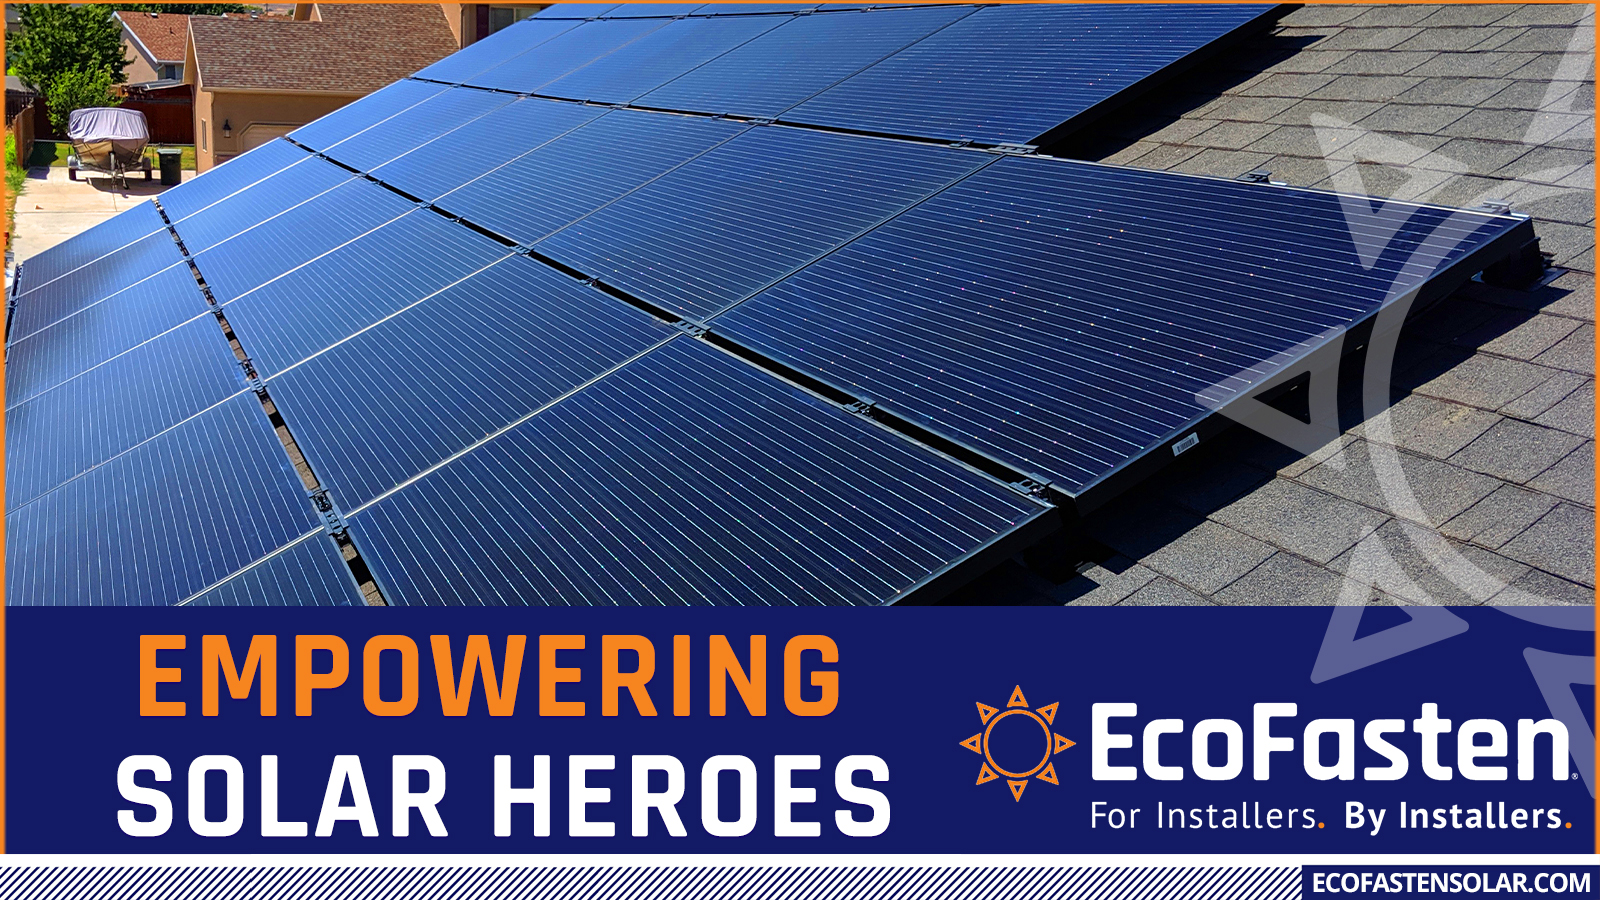 EcoFasten Empowers Solar Heroes